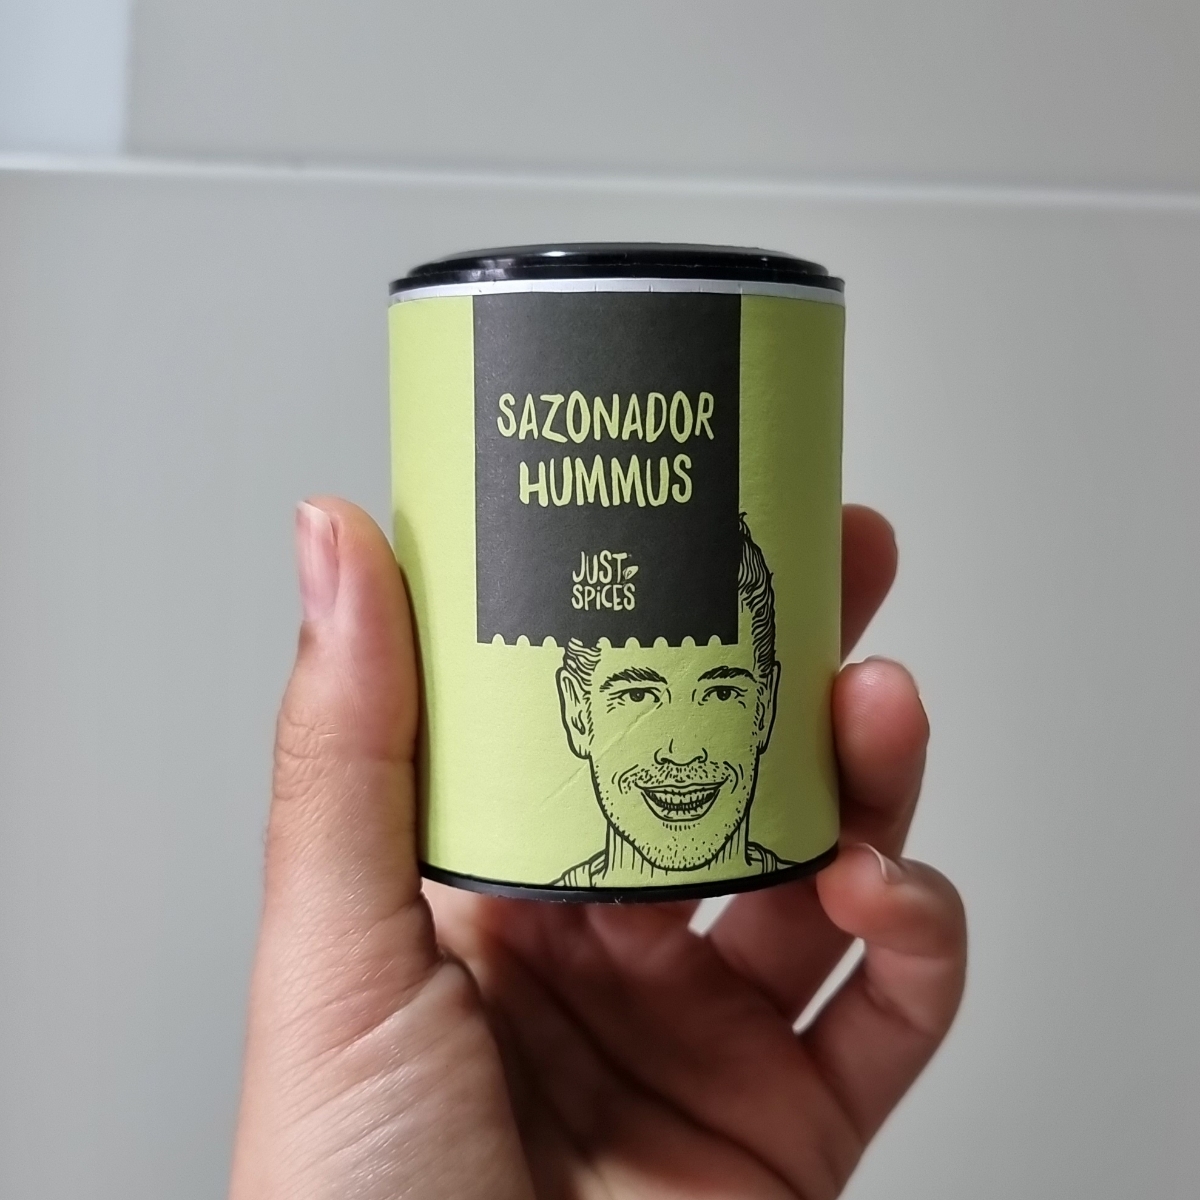 Just Spices Sazonador hummus Review